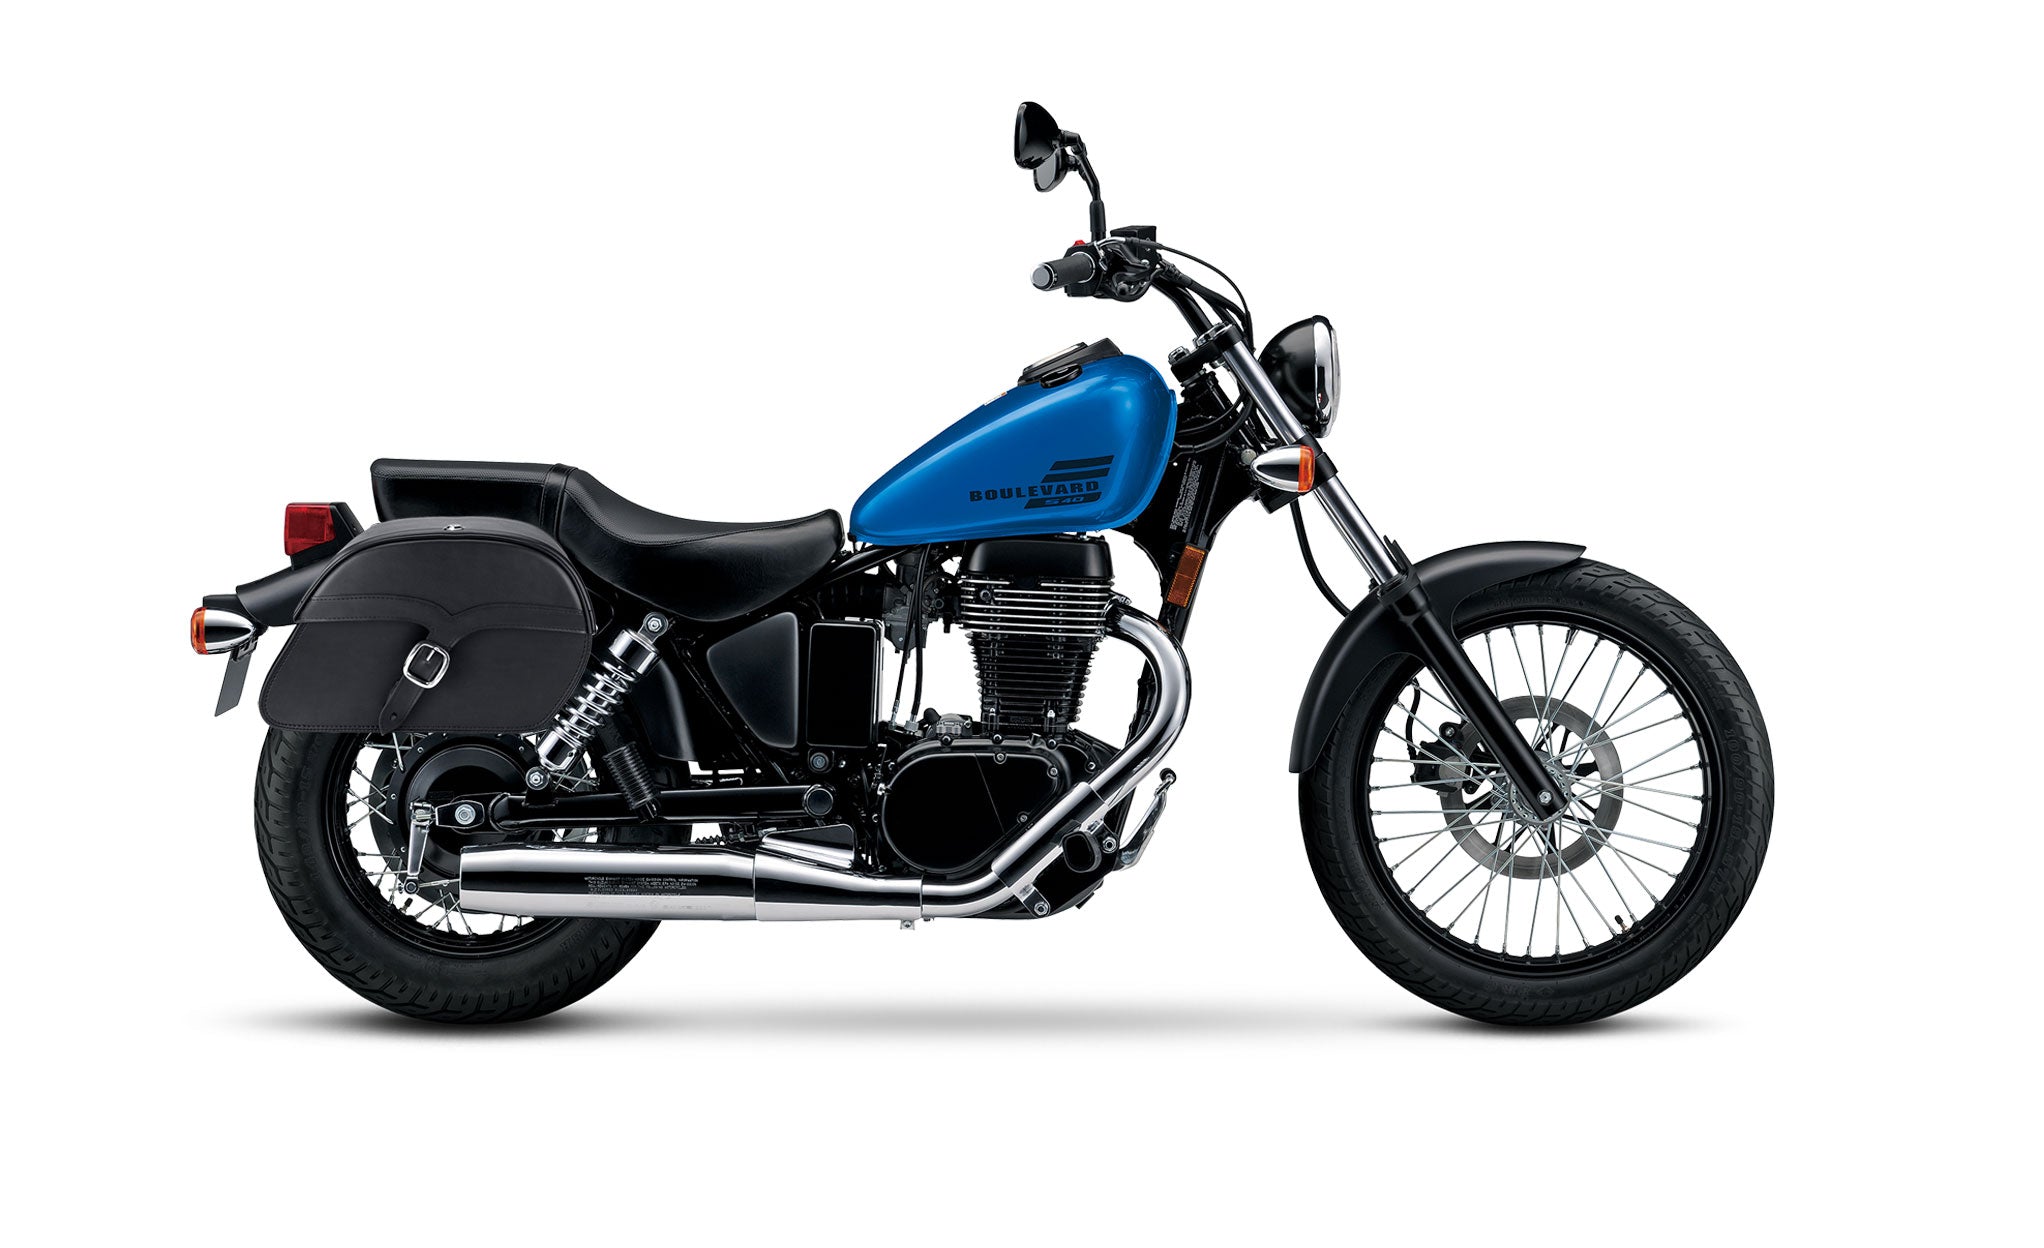 Viking Vintage Medium Suzuki Boulevard S40 Savage Ls650 Leather Motorcycle Saddlebags on Bike Photo @expand